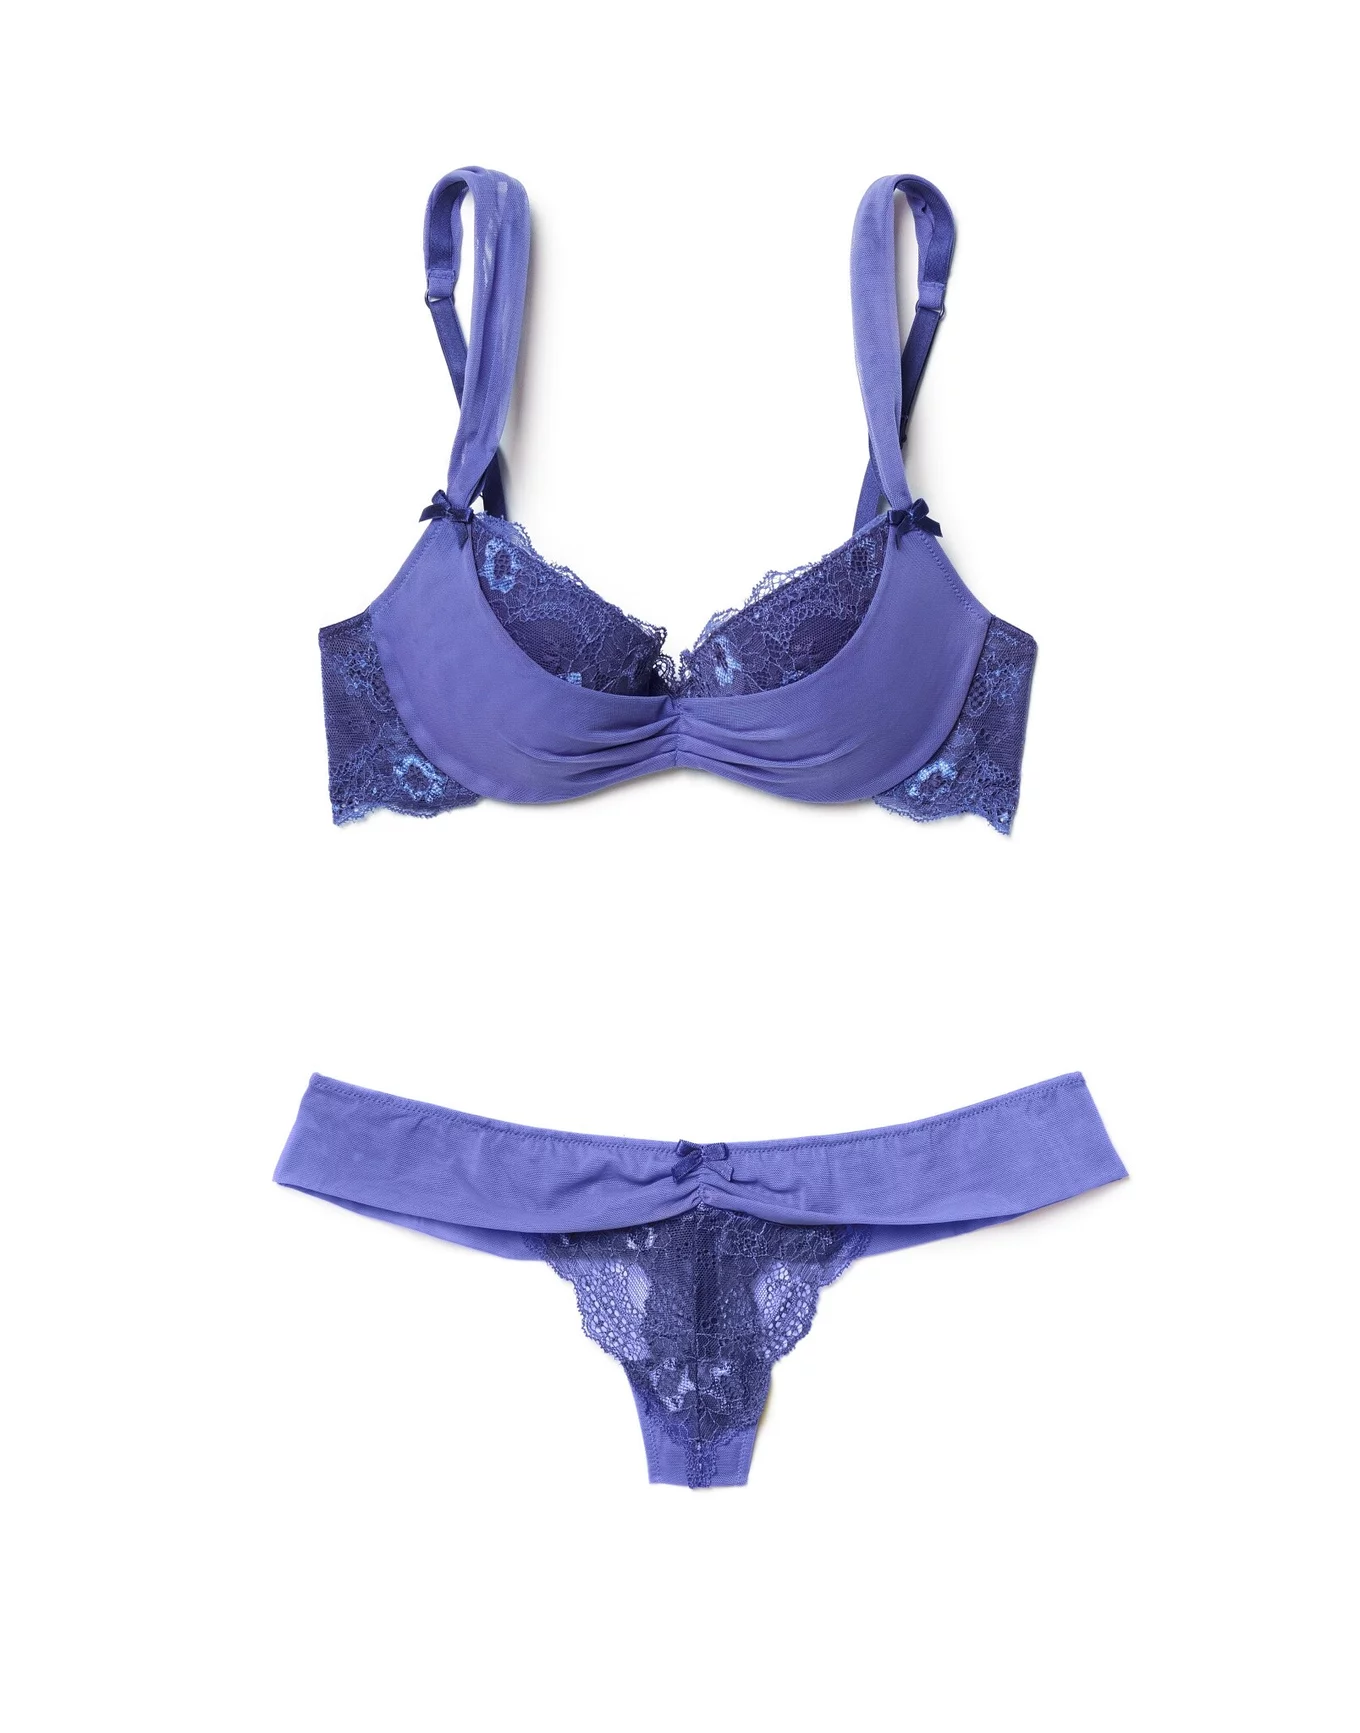 Eashery Underoutfit Bras for Women Women鈥檚 Constant Convertible Strap  Lightly Lined Demi Bra Purple 40